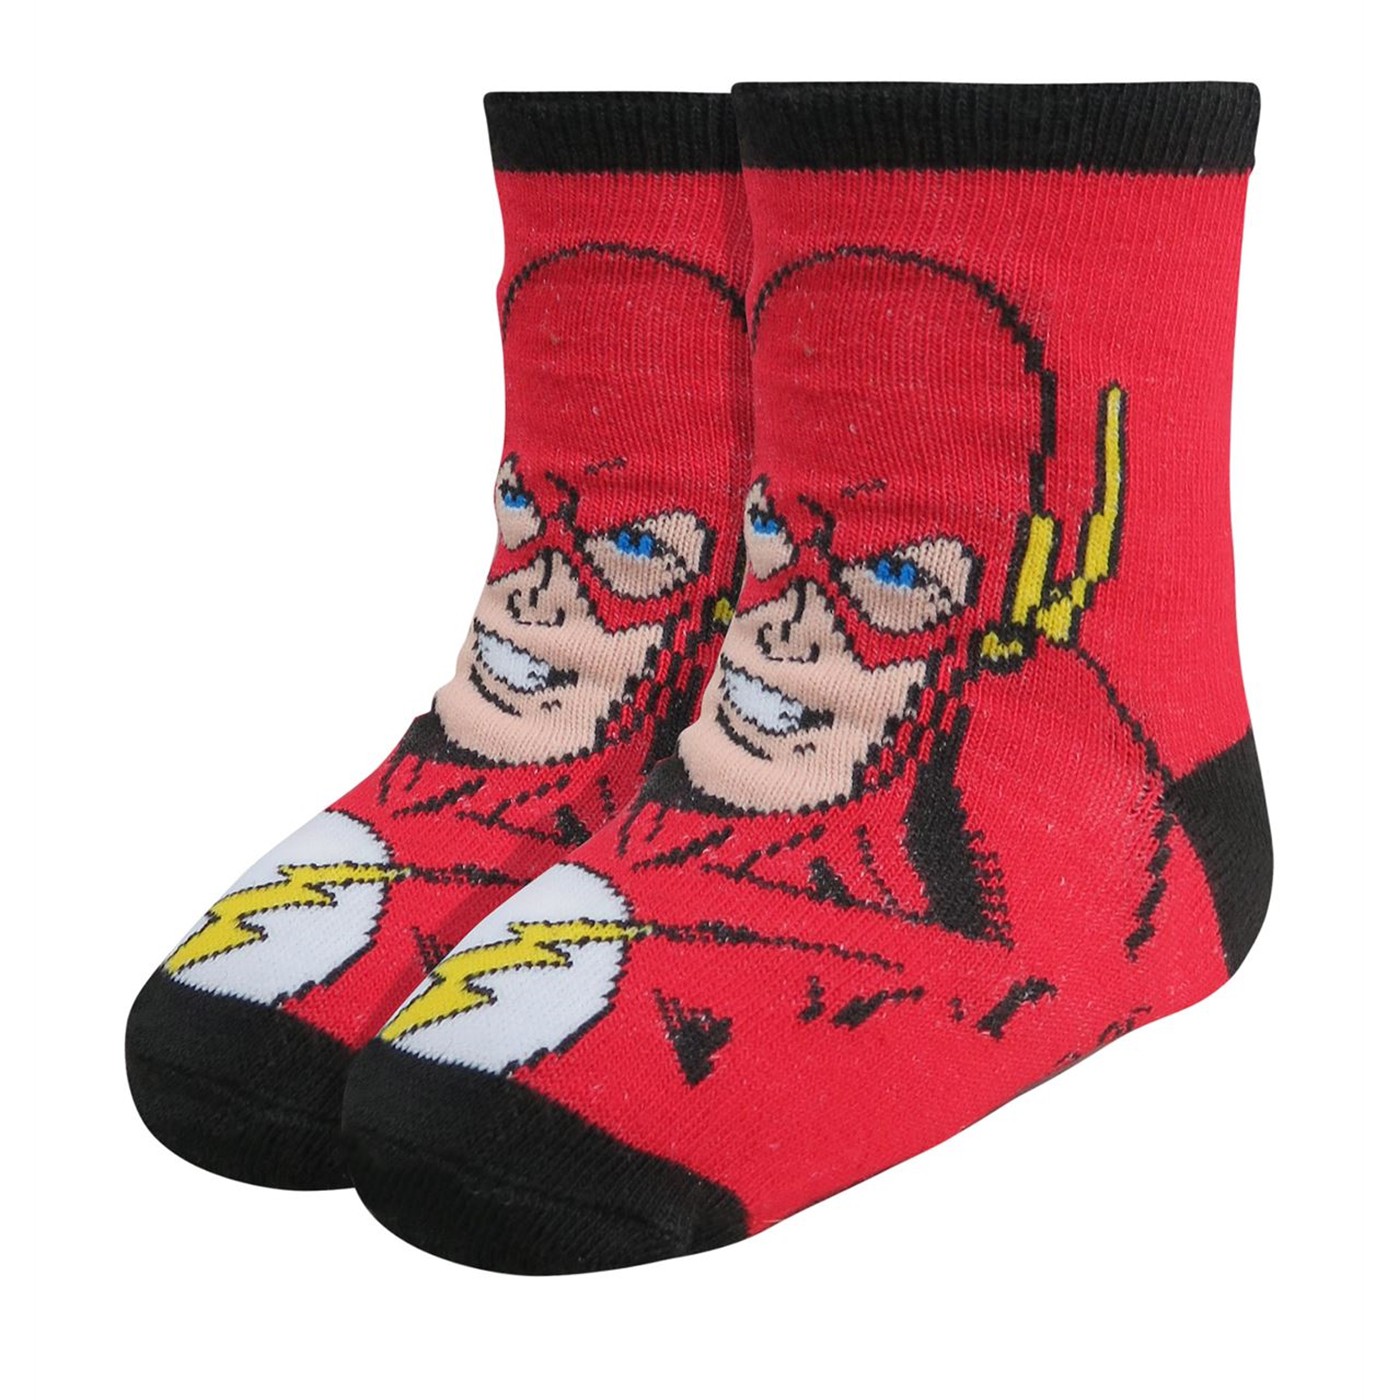 Justice League Action Kids Socks 6-Pack